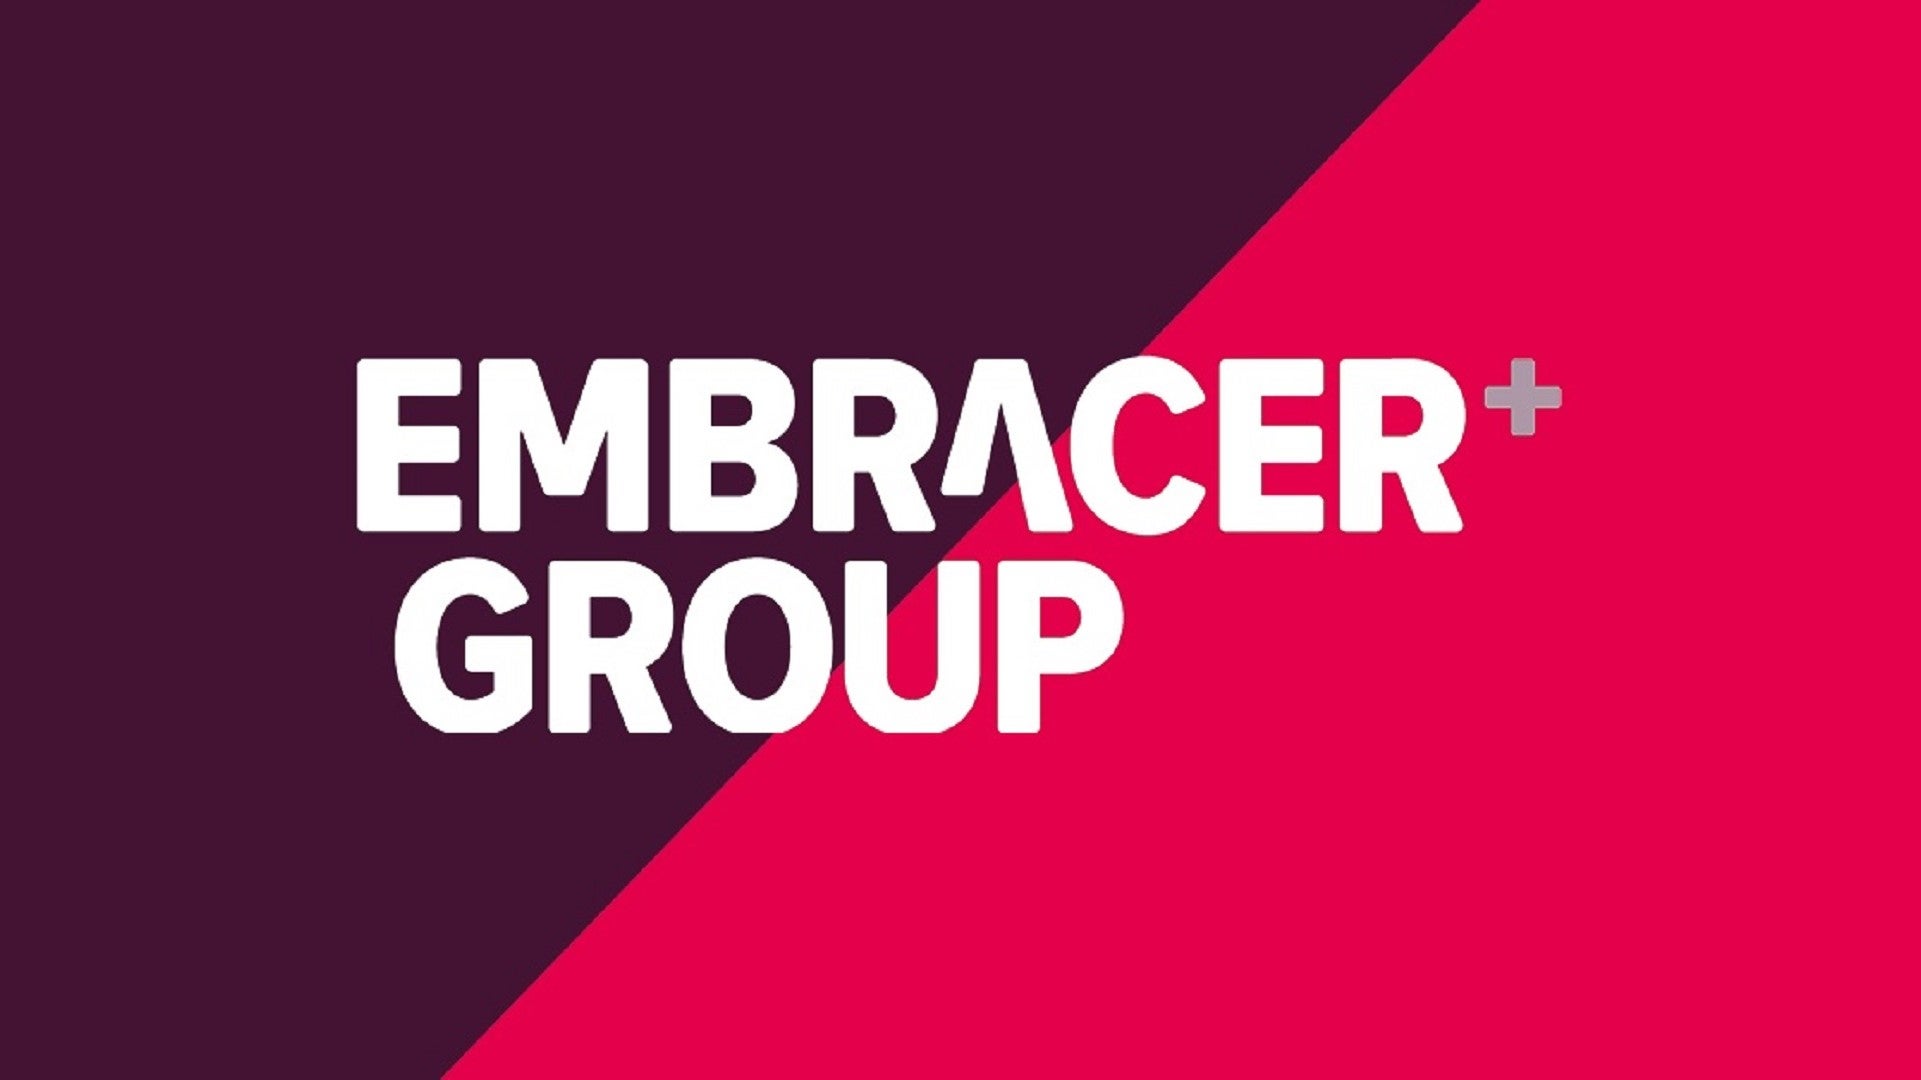 Image for Embracer net sales up 107% for Q1